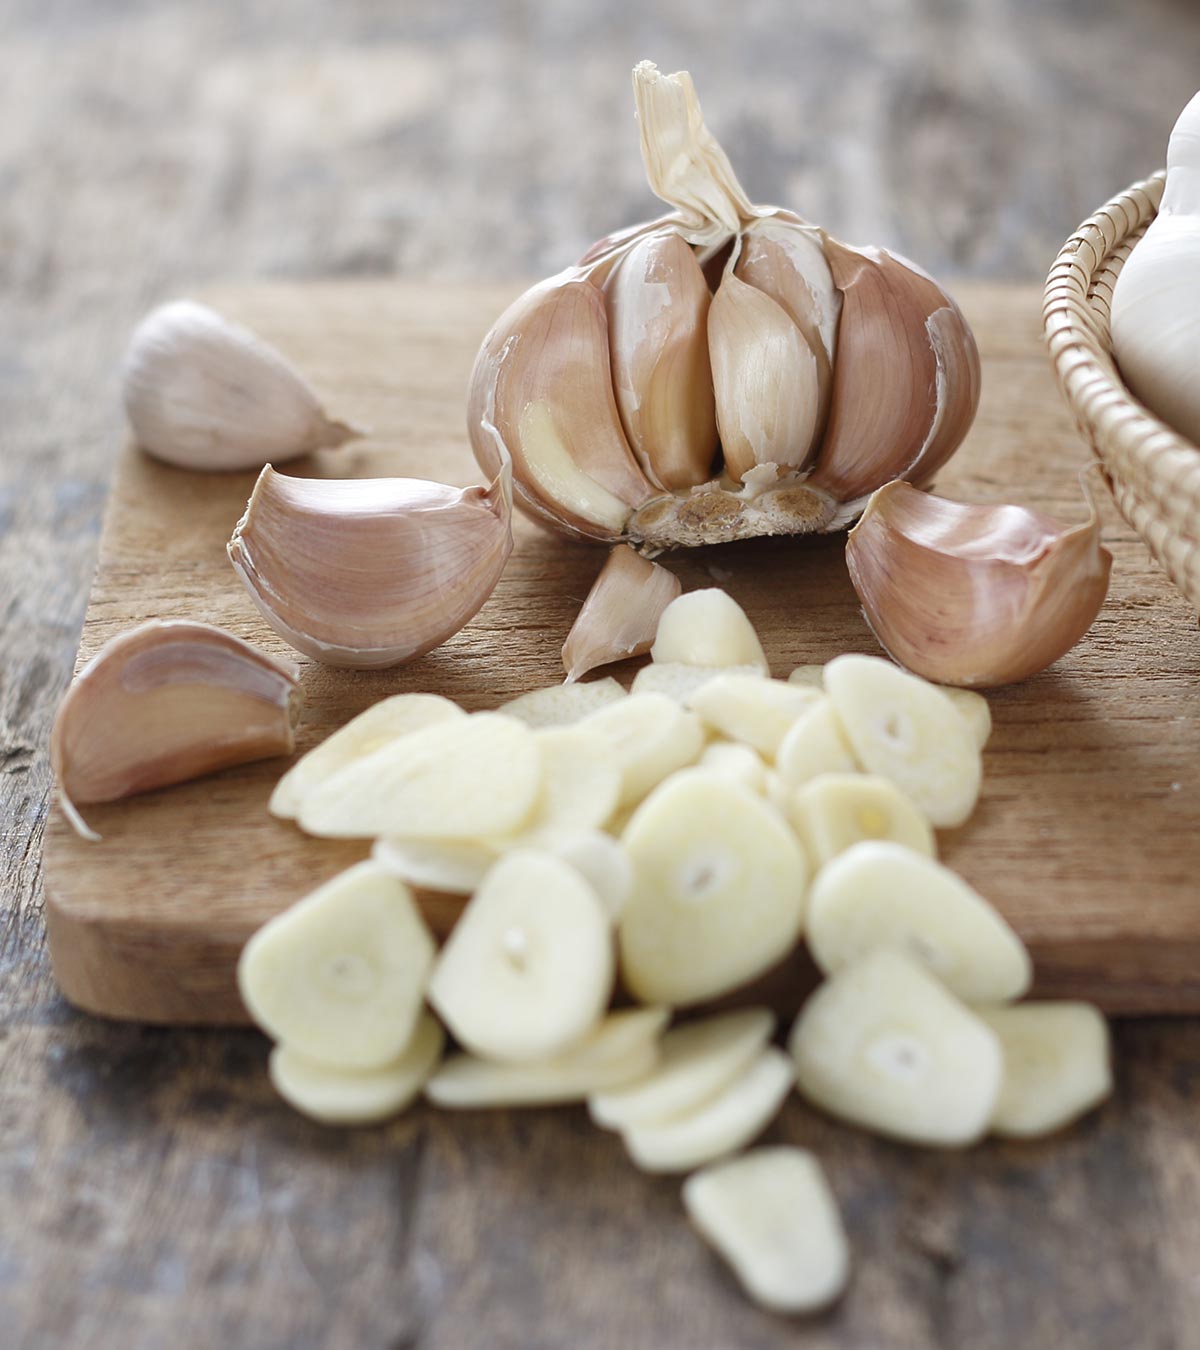 6 Health Benefits Of Garlic For Babies